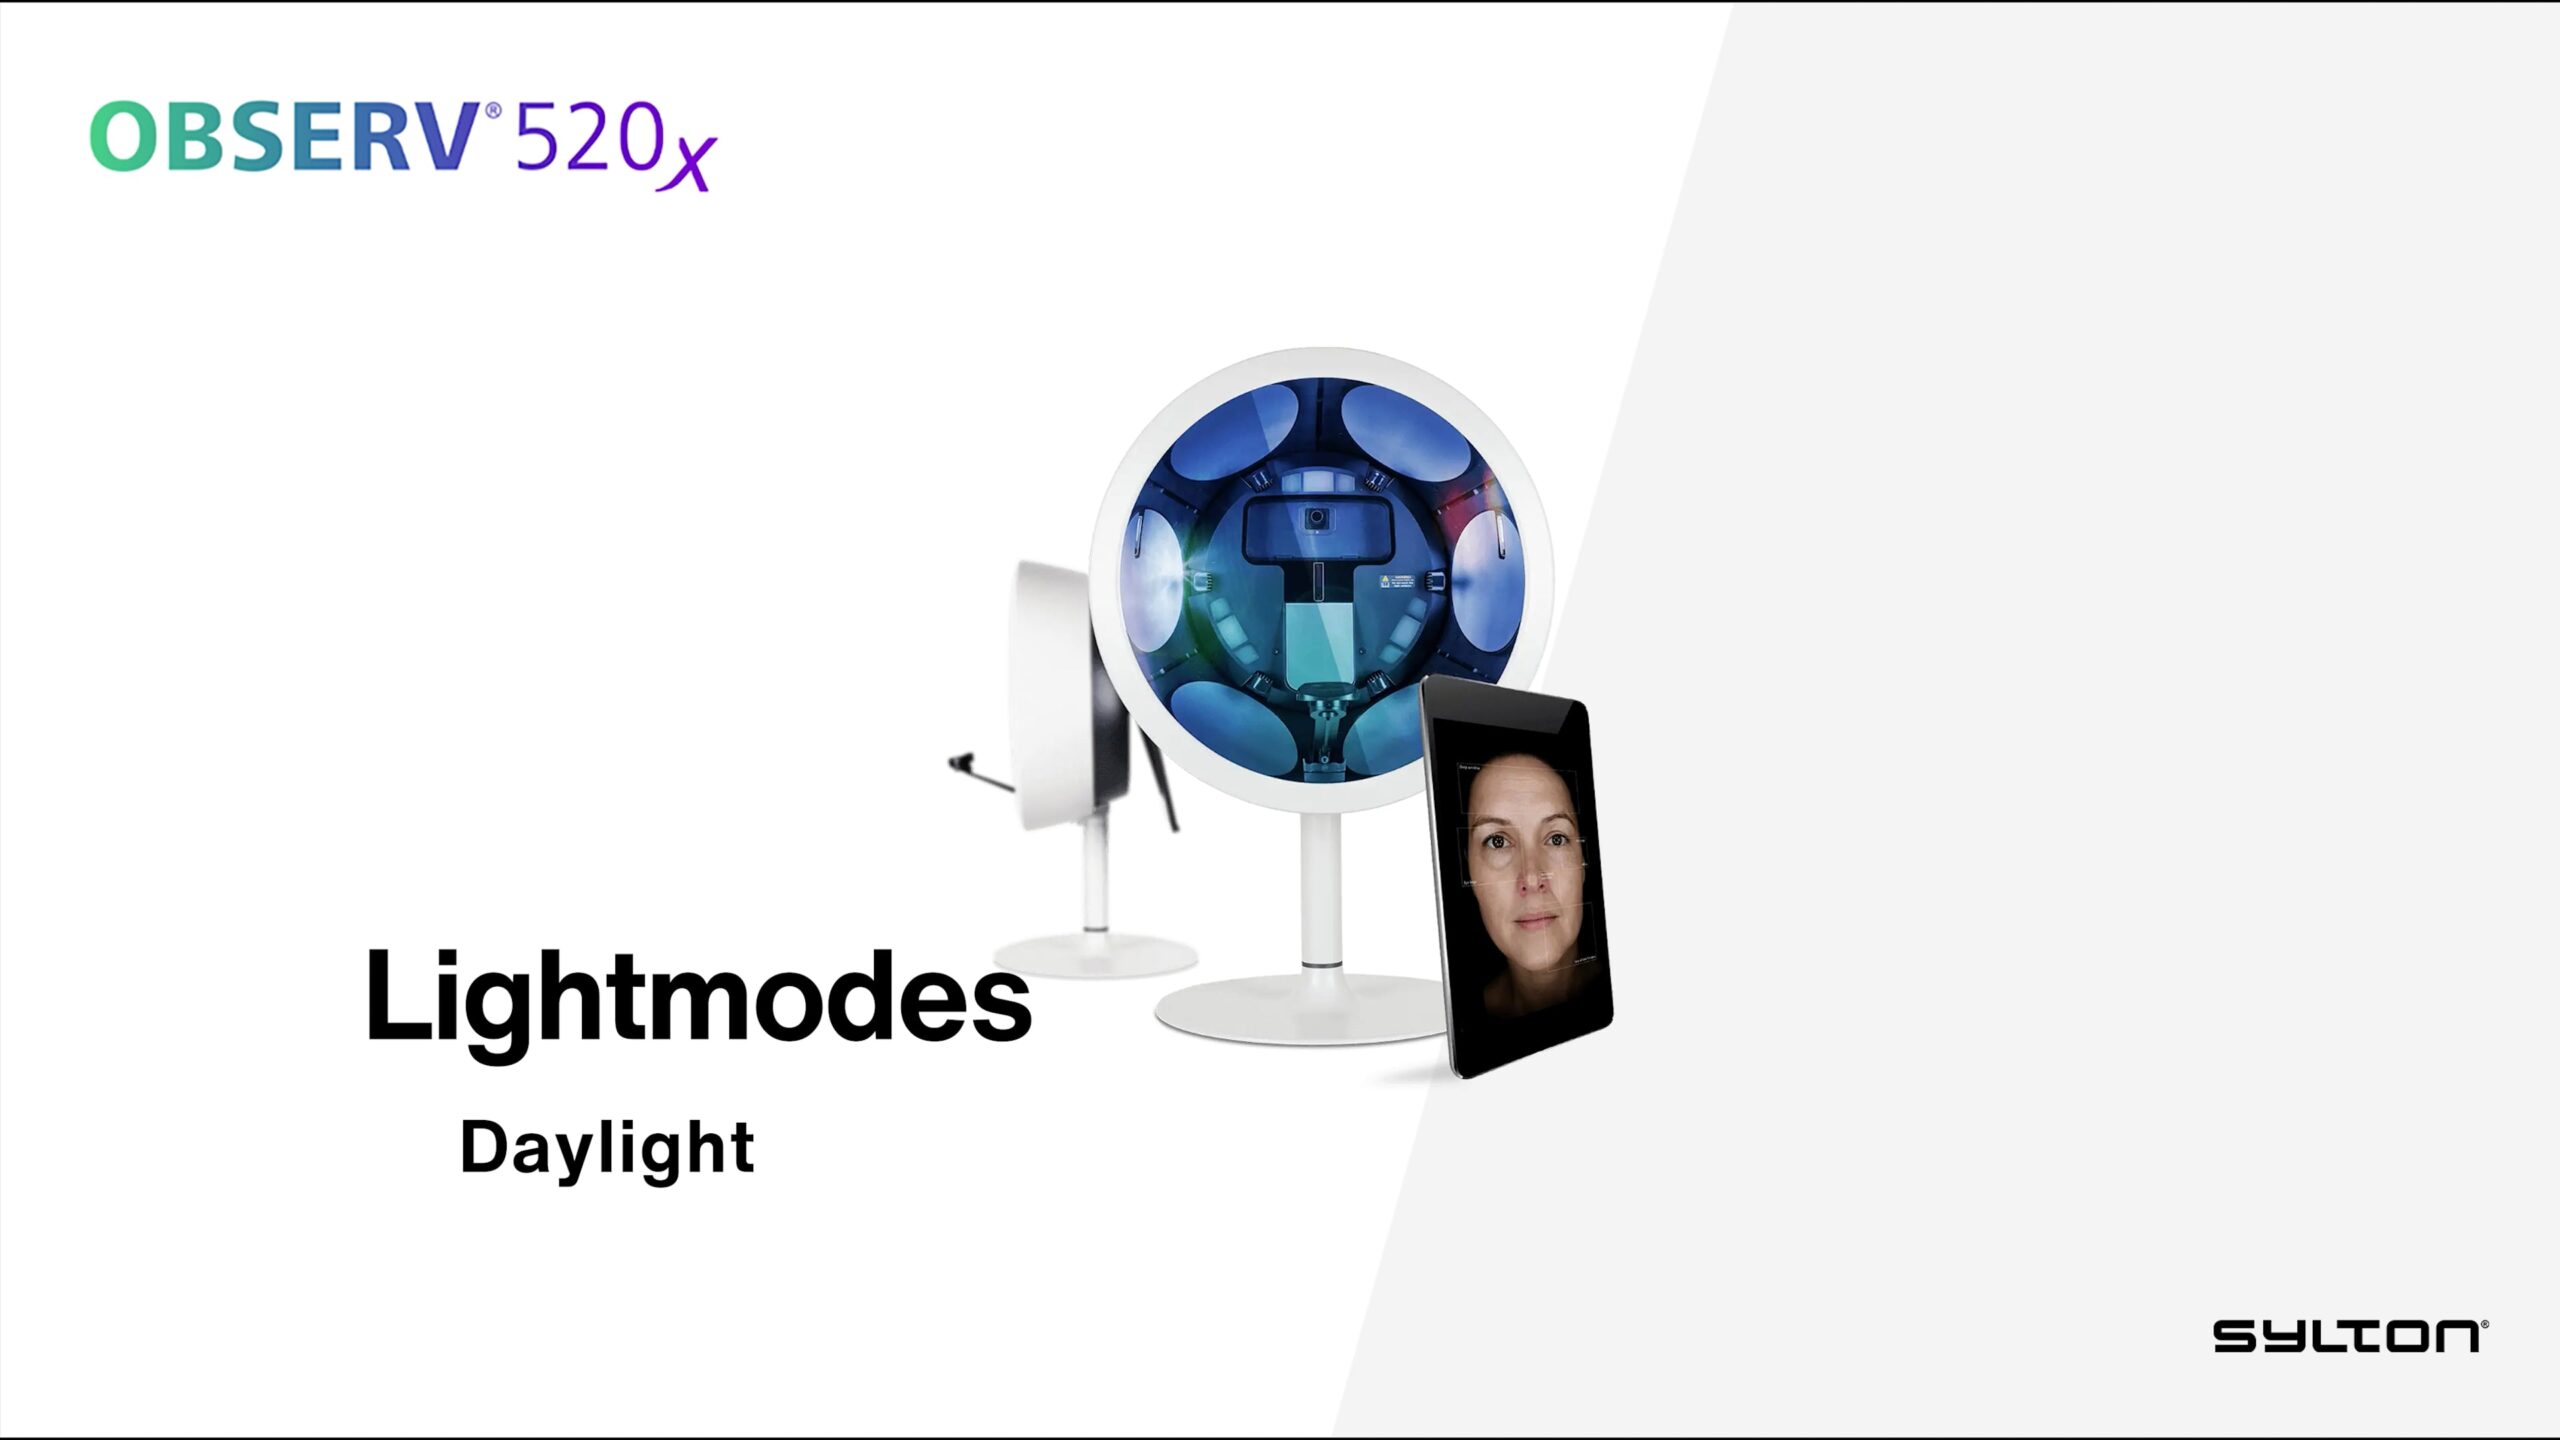 Lightmodes of the Observ 520x - Daylight